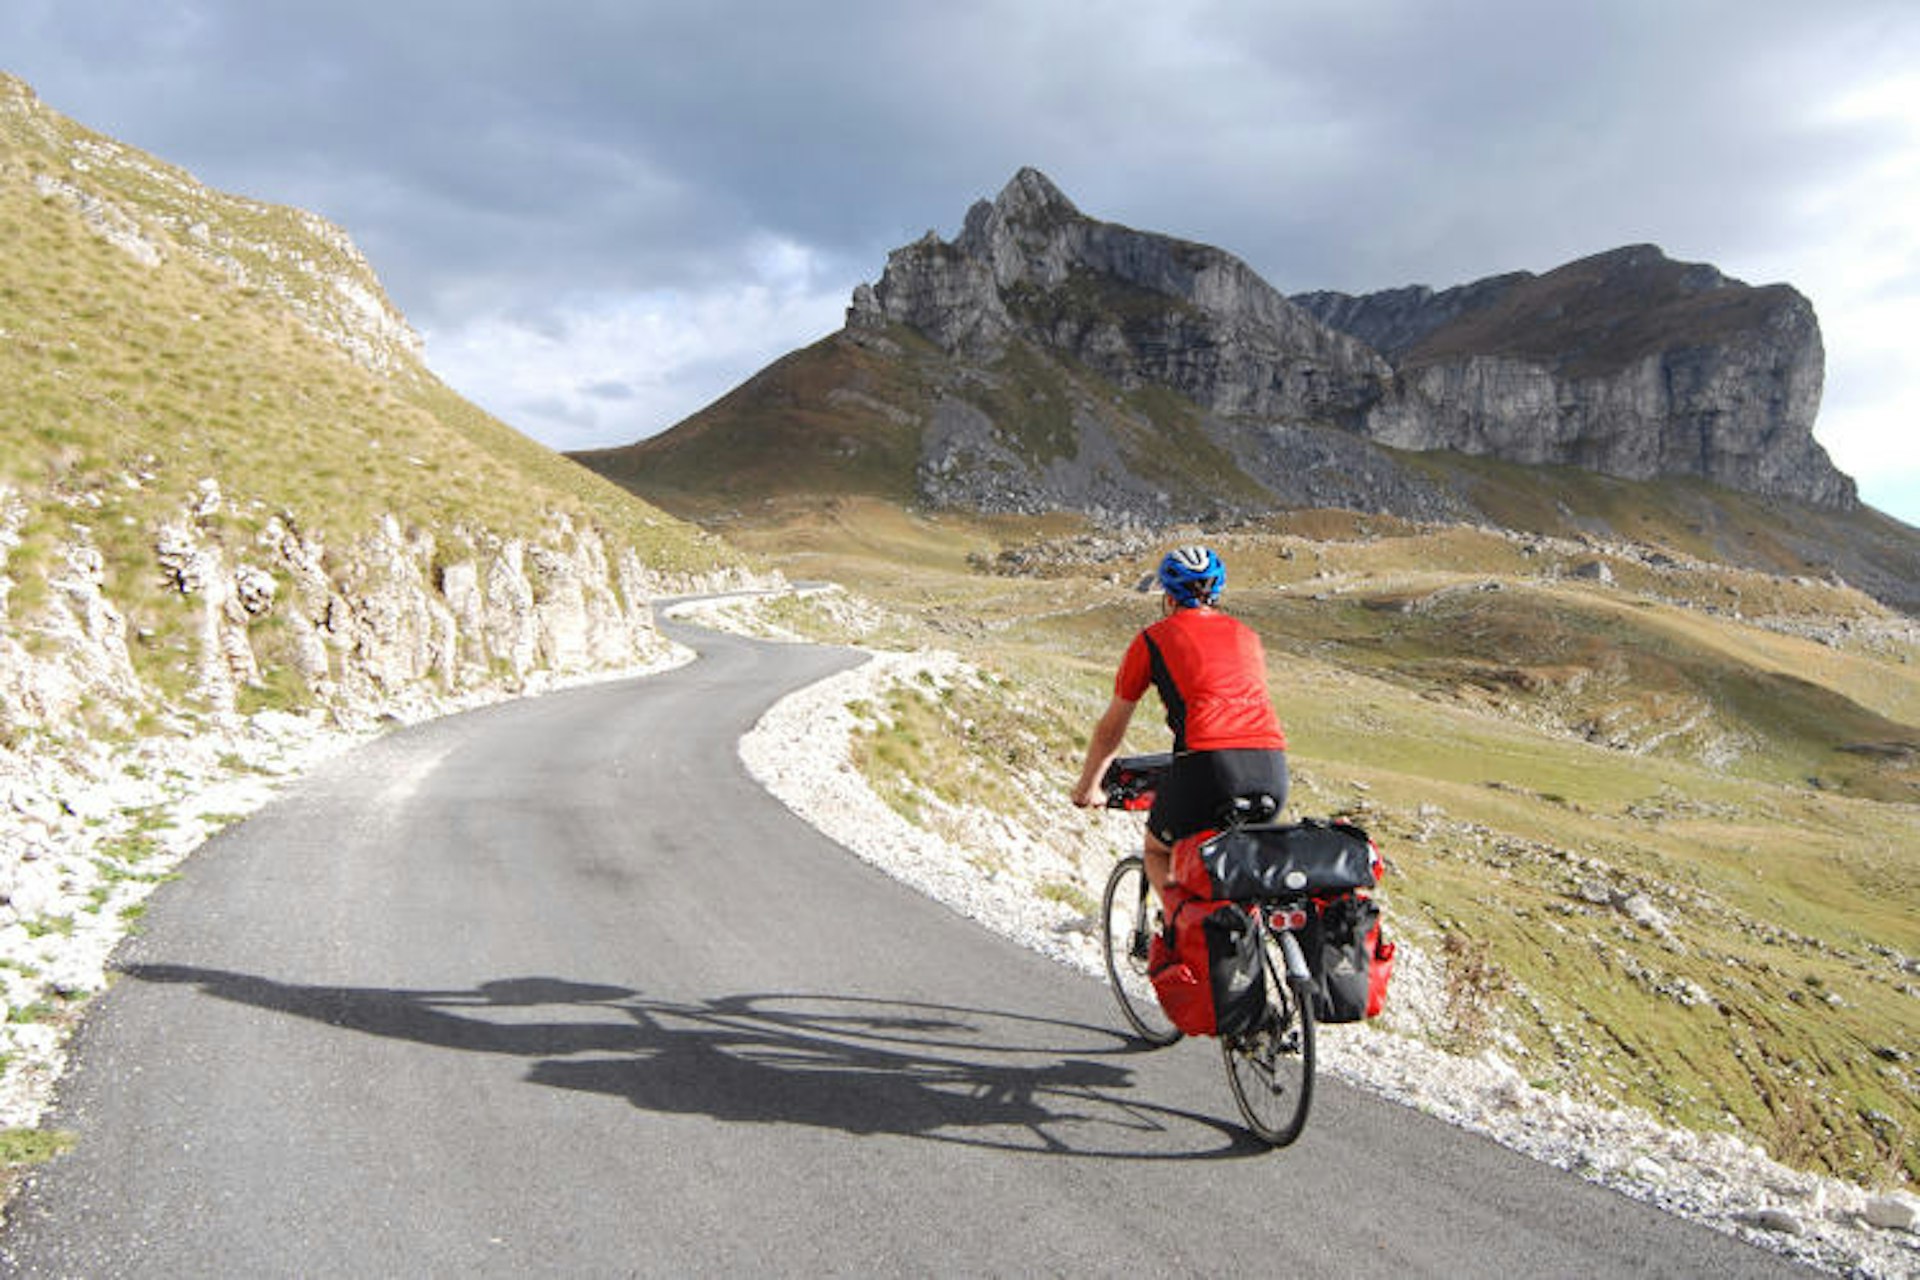 Biking in Durmitor National Park. Image courtesy of Montenegro National Tourist Organisation